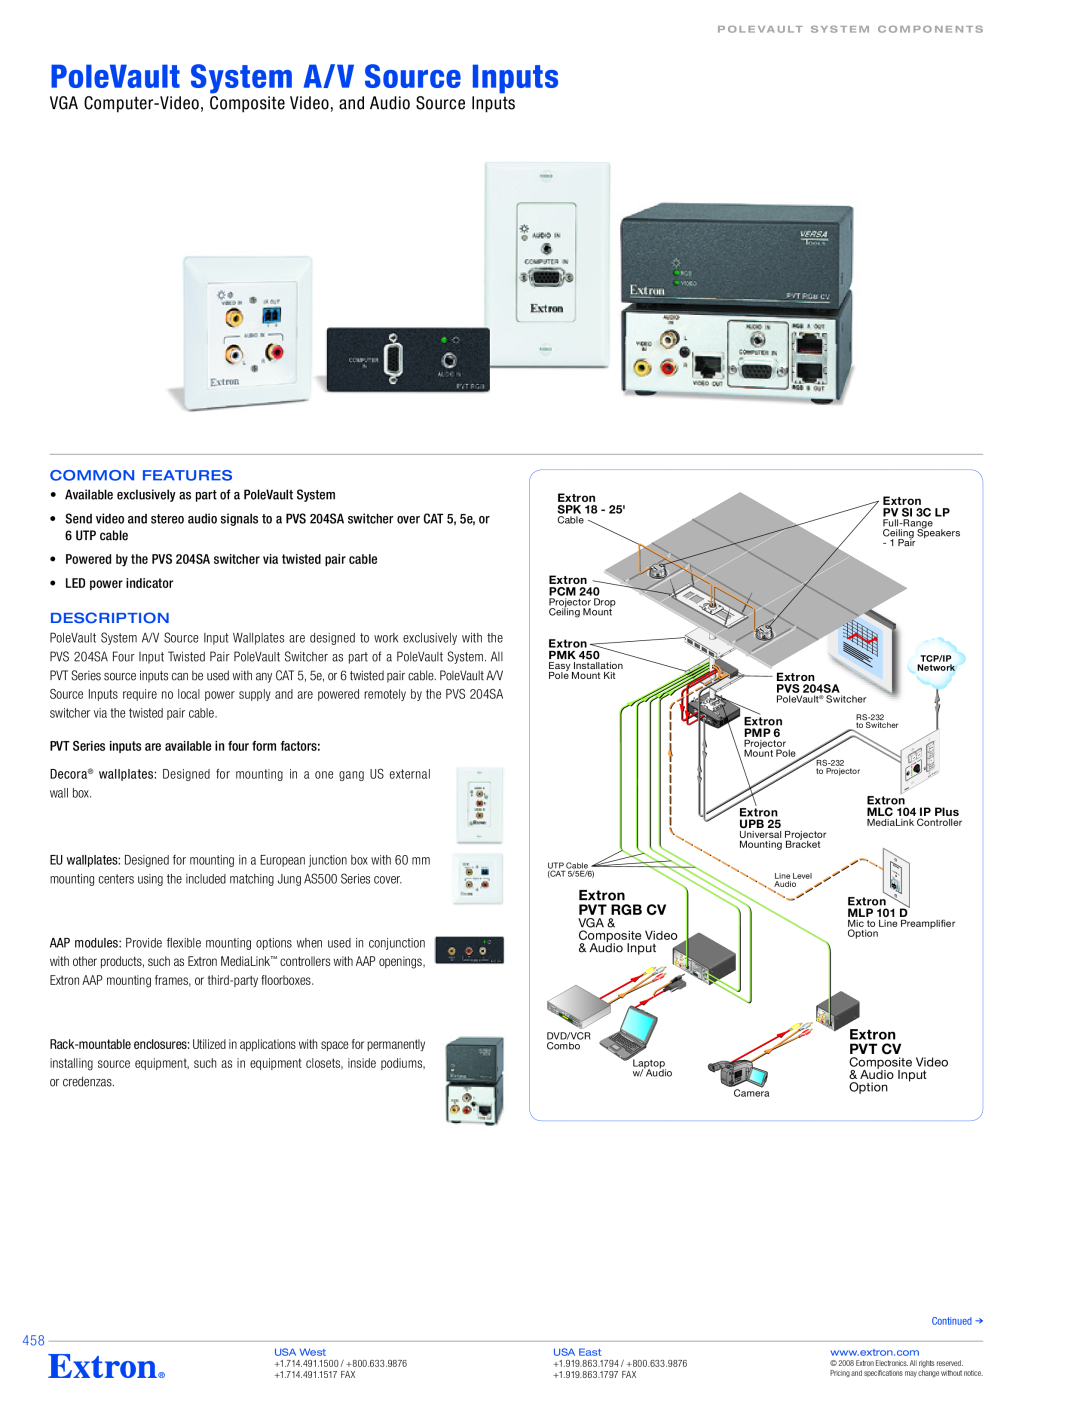 Extron electronic PoleVault System A/V Source Inputs specifications common Features, Description, Extron PVT RGB CV 